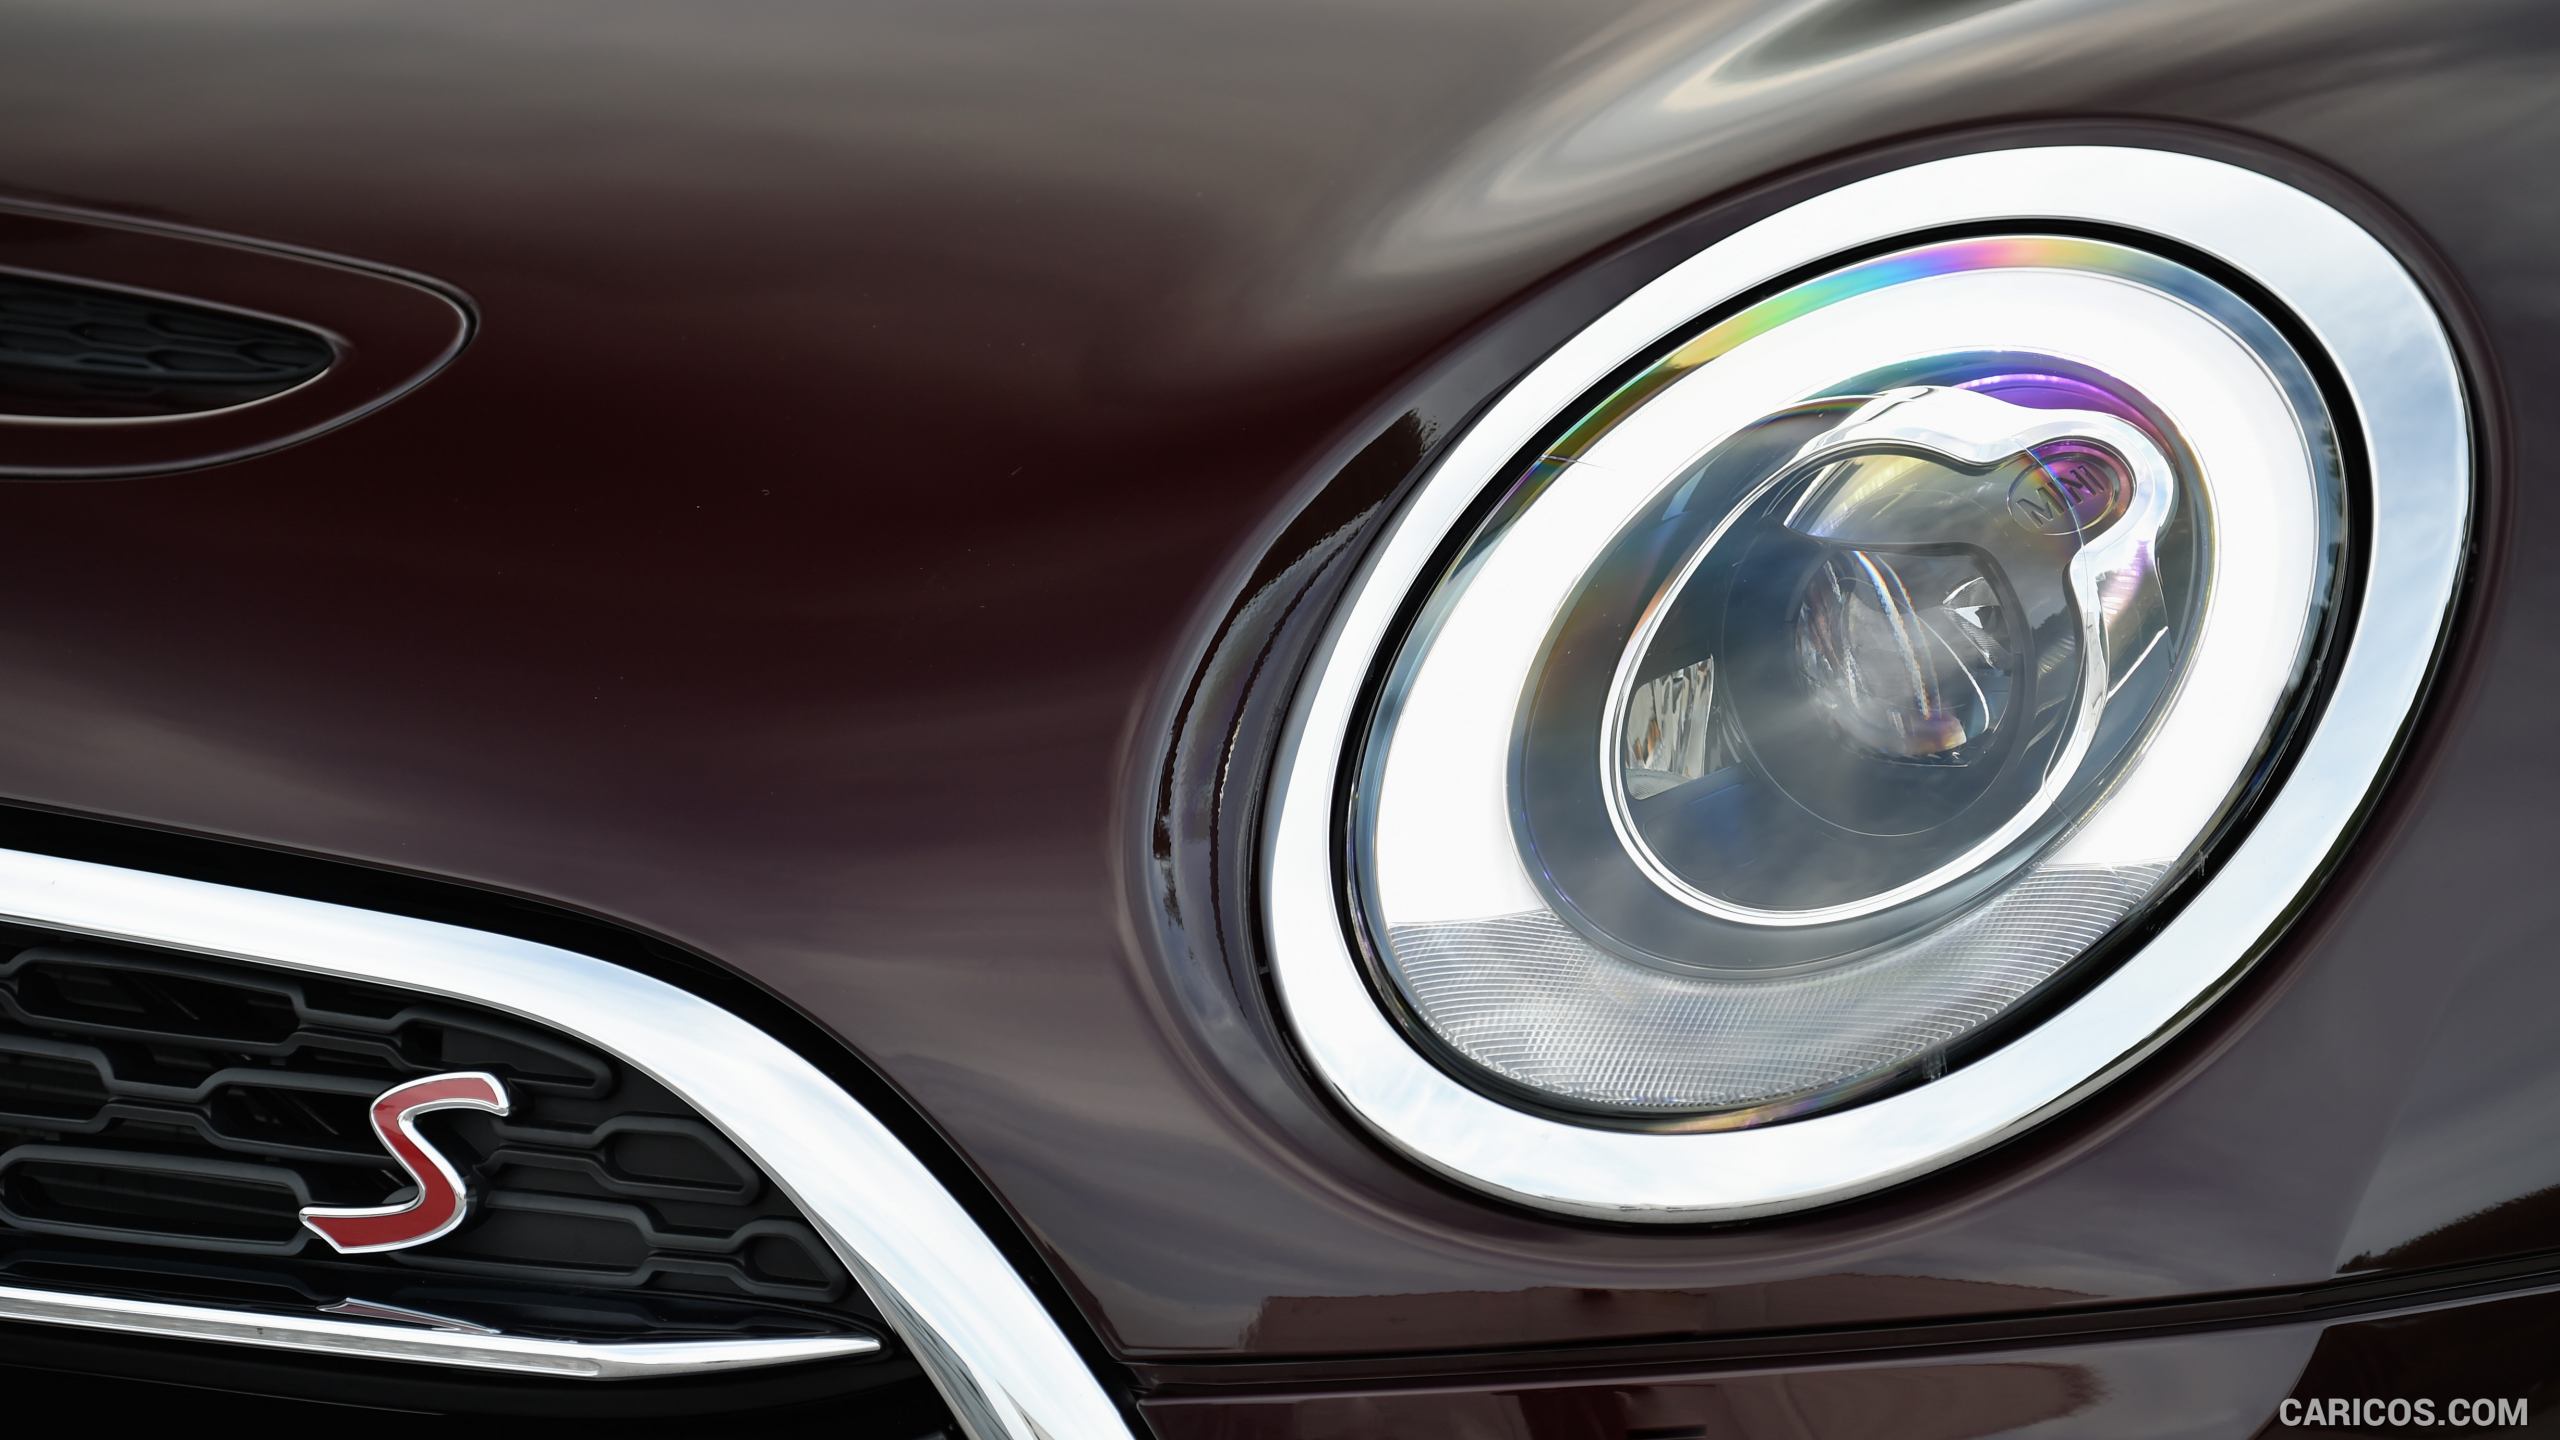 2016 MINI Cooper S Clubman in Metallic Pure Burgundy - Headlight, #343 of 380